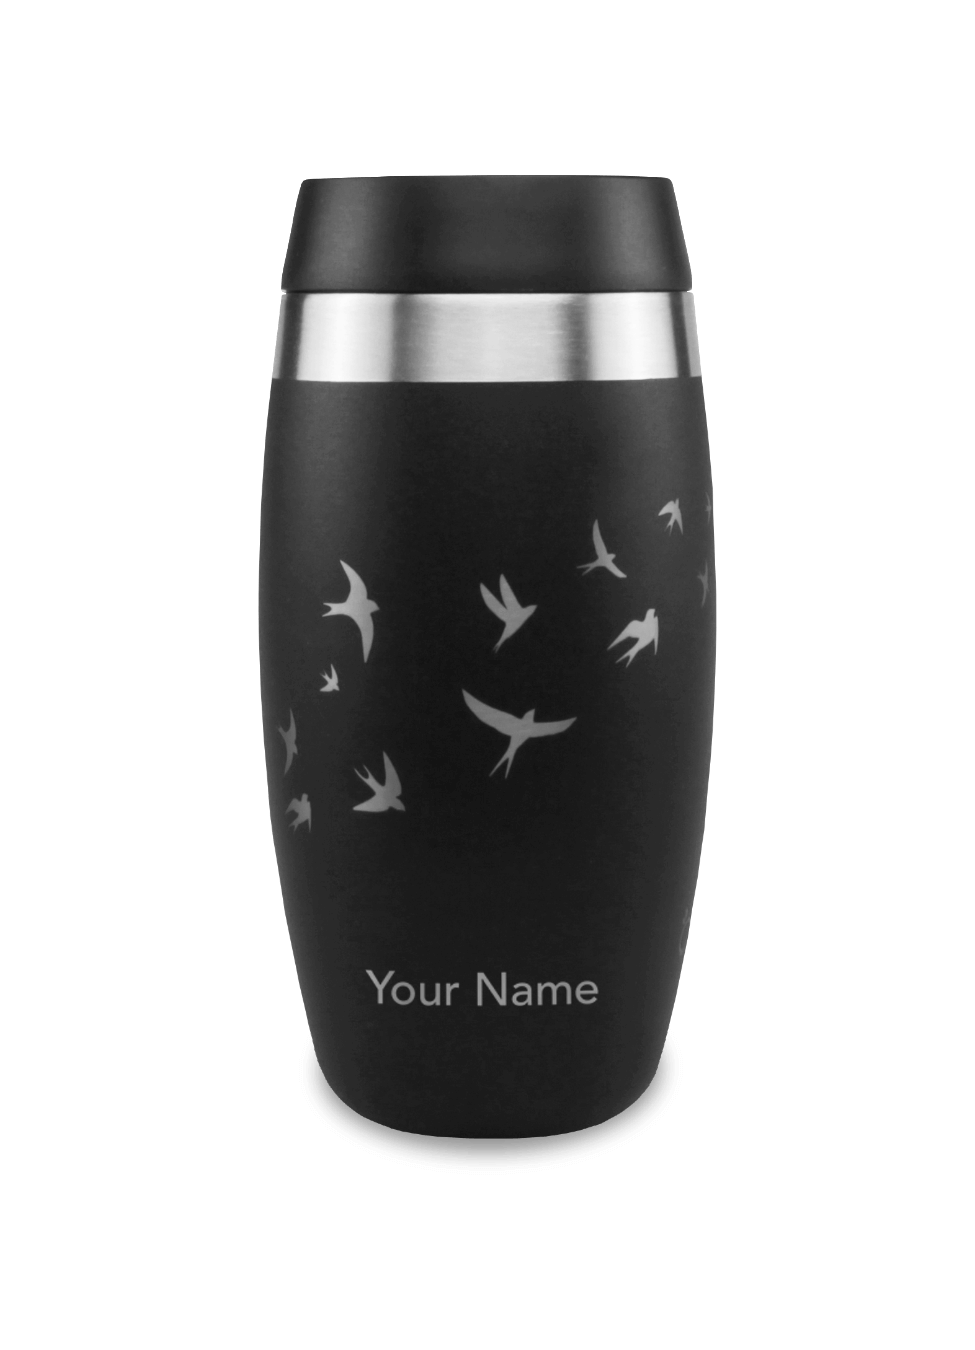 Personalised reusable coffee cup in black bird design